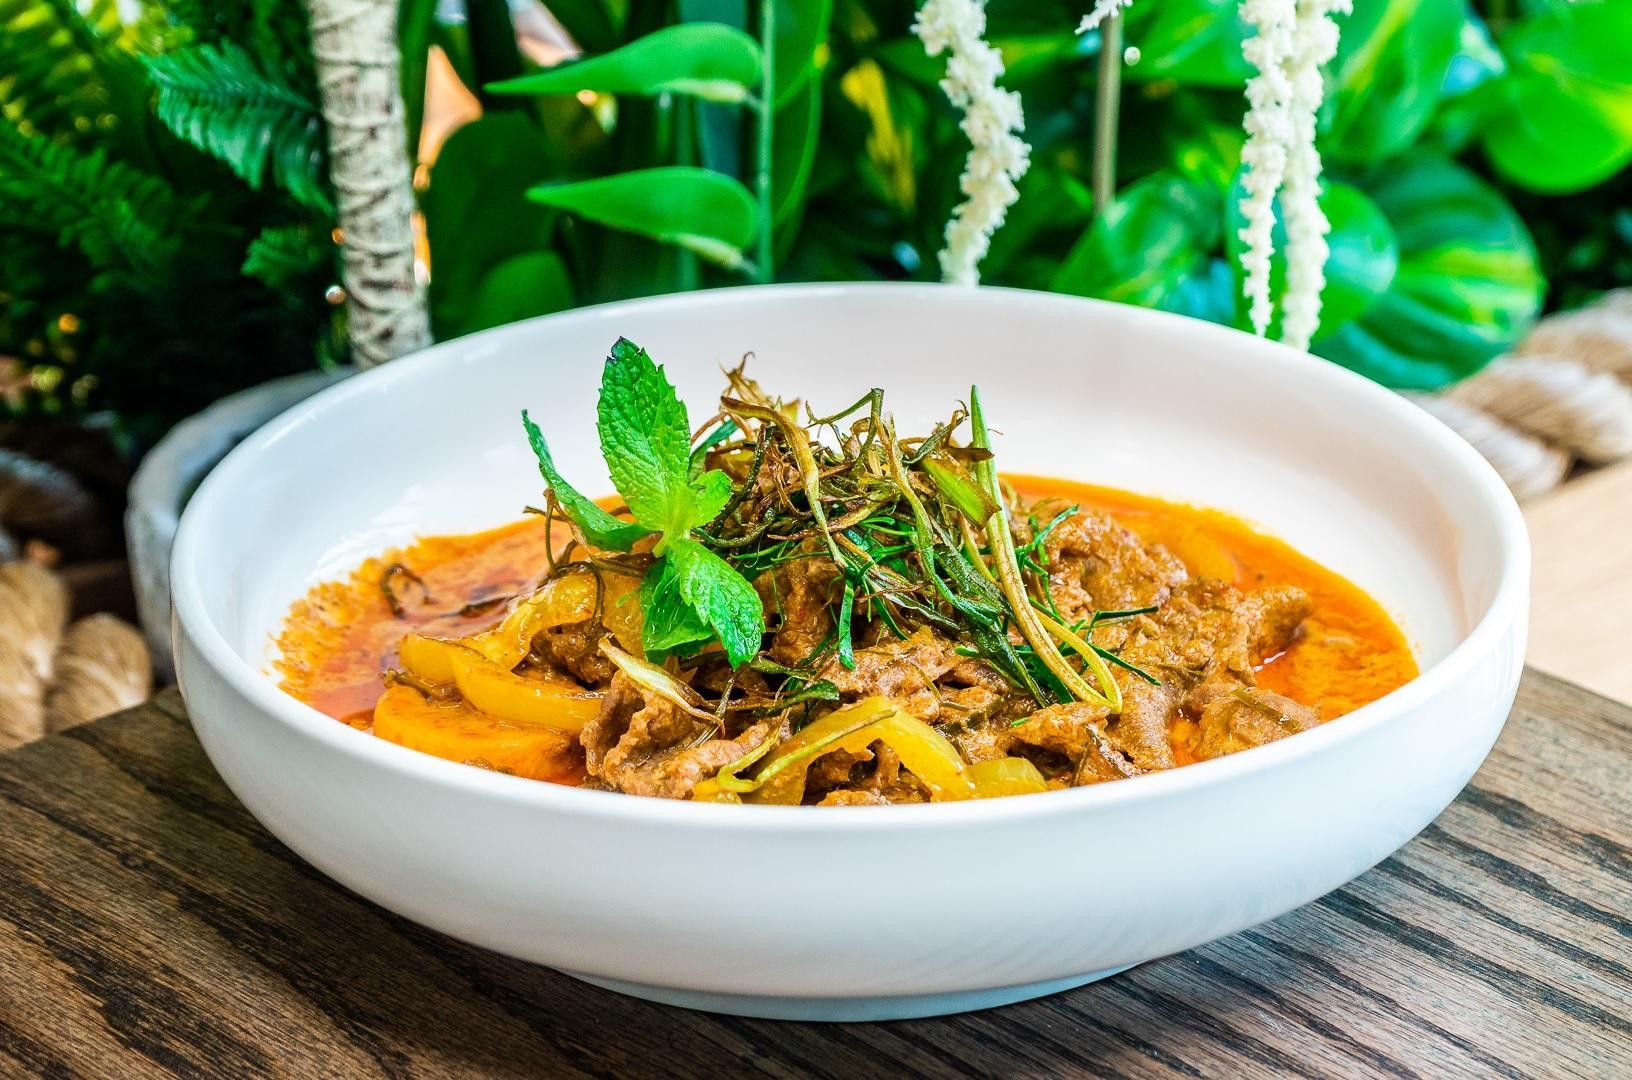 #8 Penang curry with kabocha